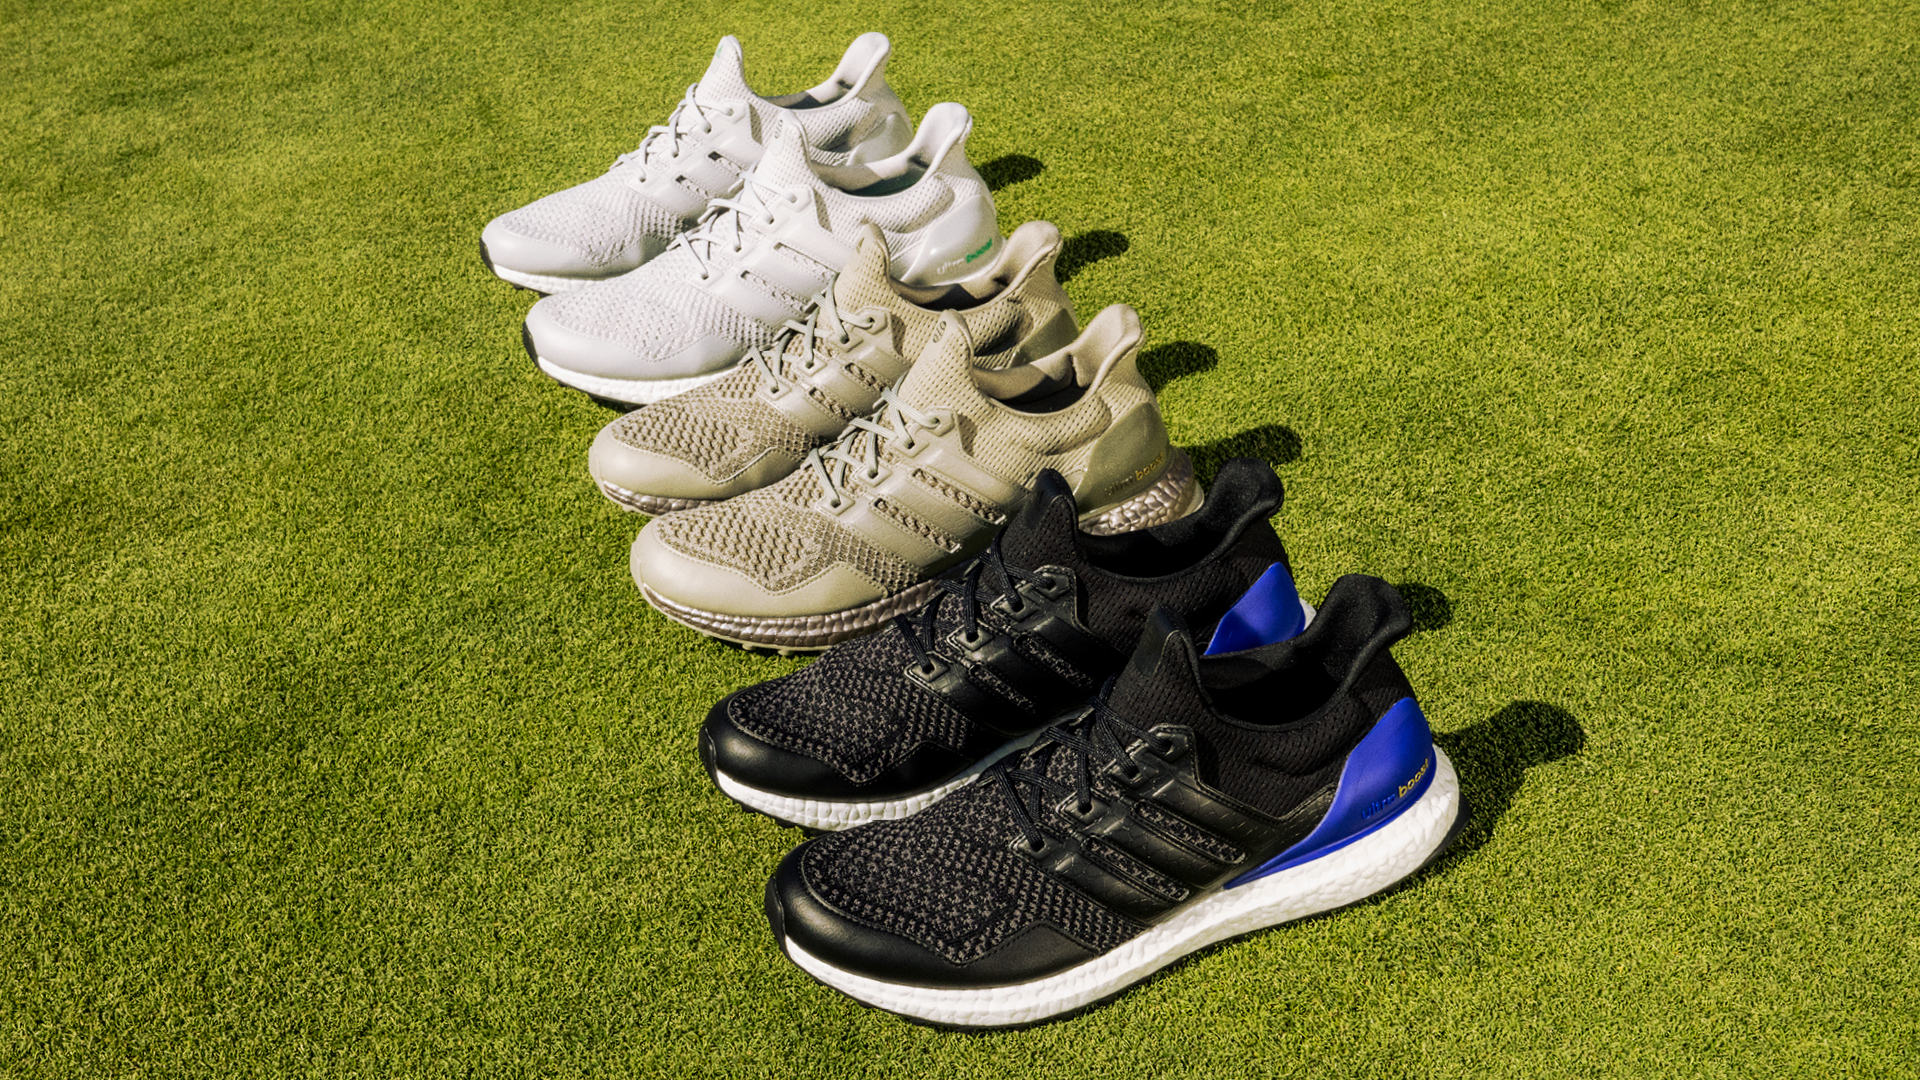 Adidas releases first Golf Shoe | Golf Clubs, Balls, Bags Golf